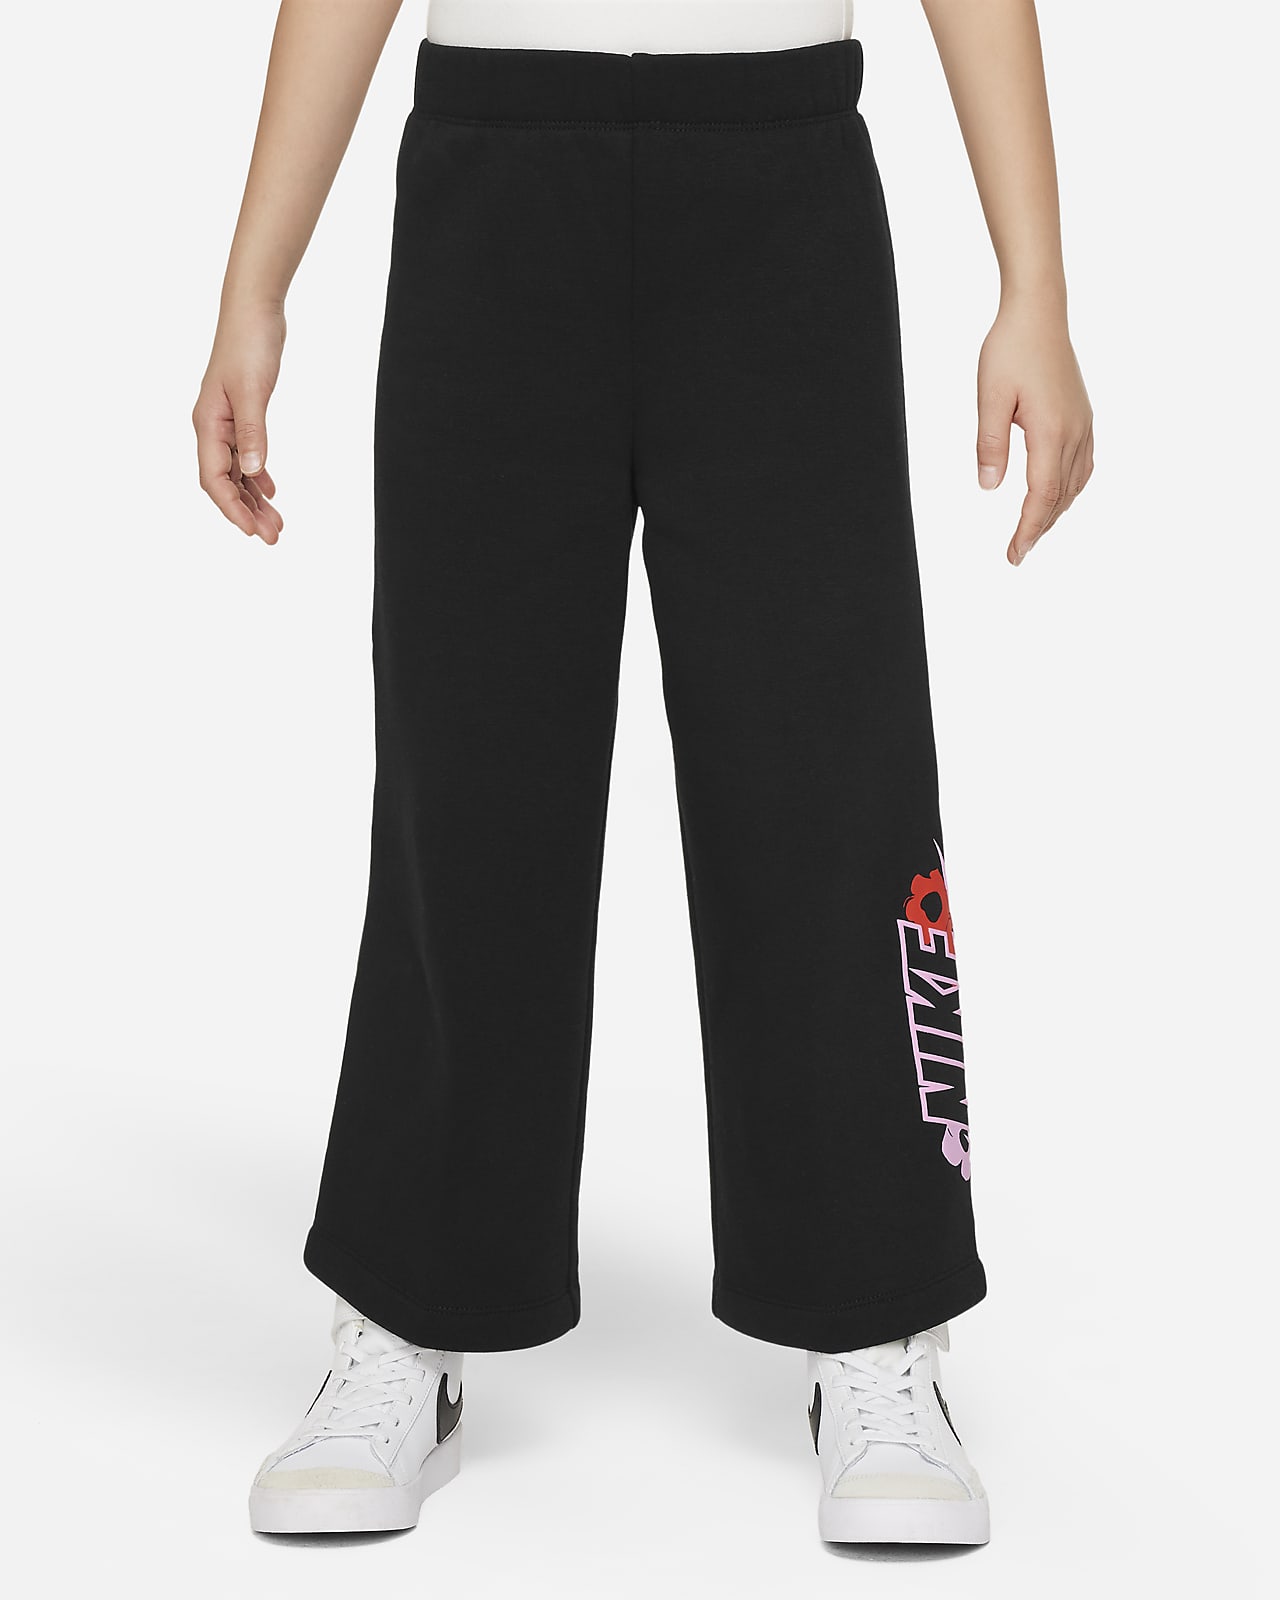 Nike Floral Fleece Pantalons amb camals amples - Nen/a petit/a